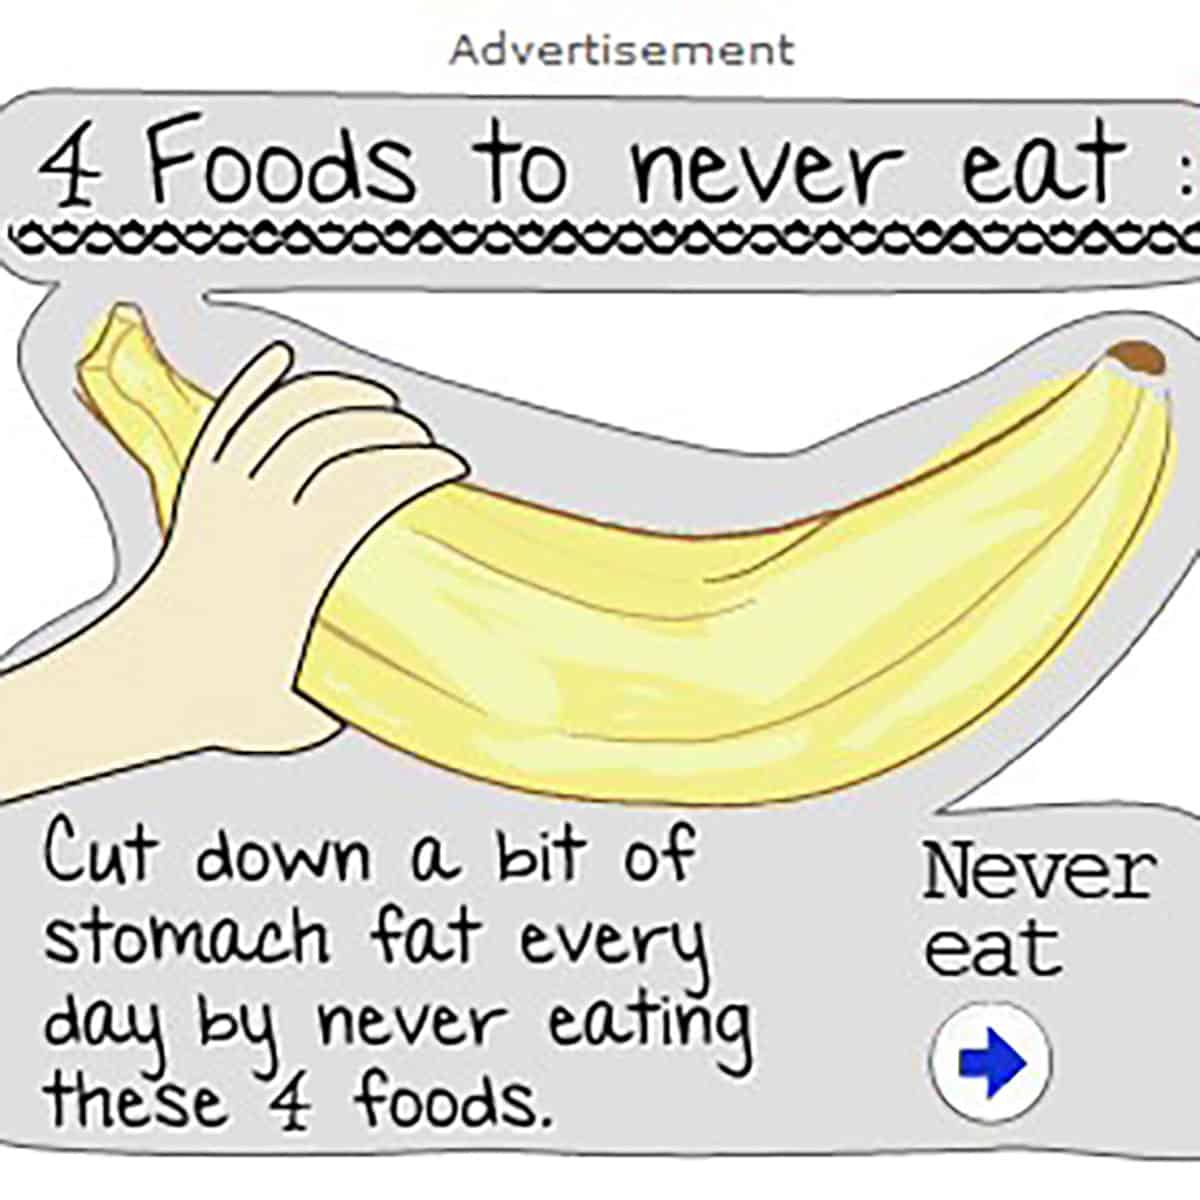 Original Google banana belly fat ad.